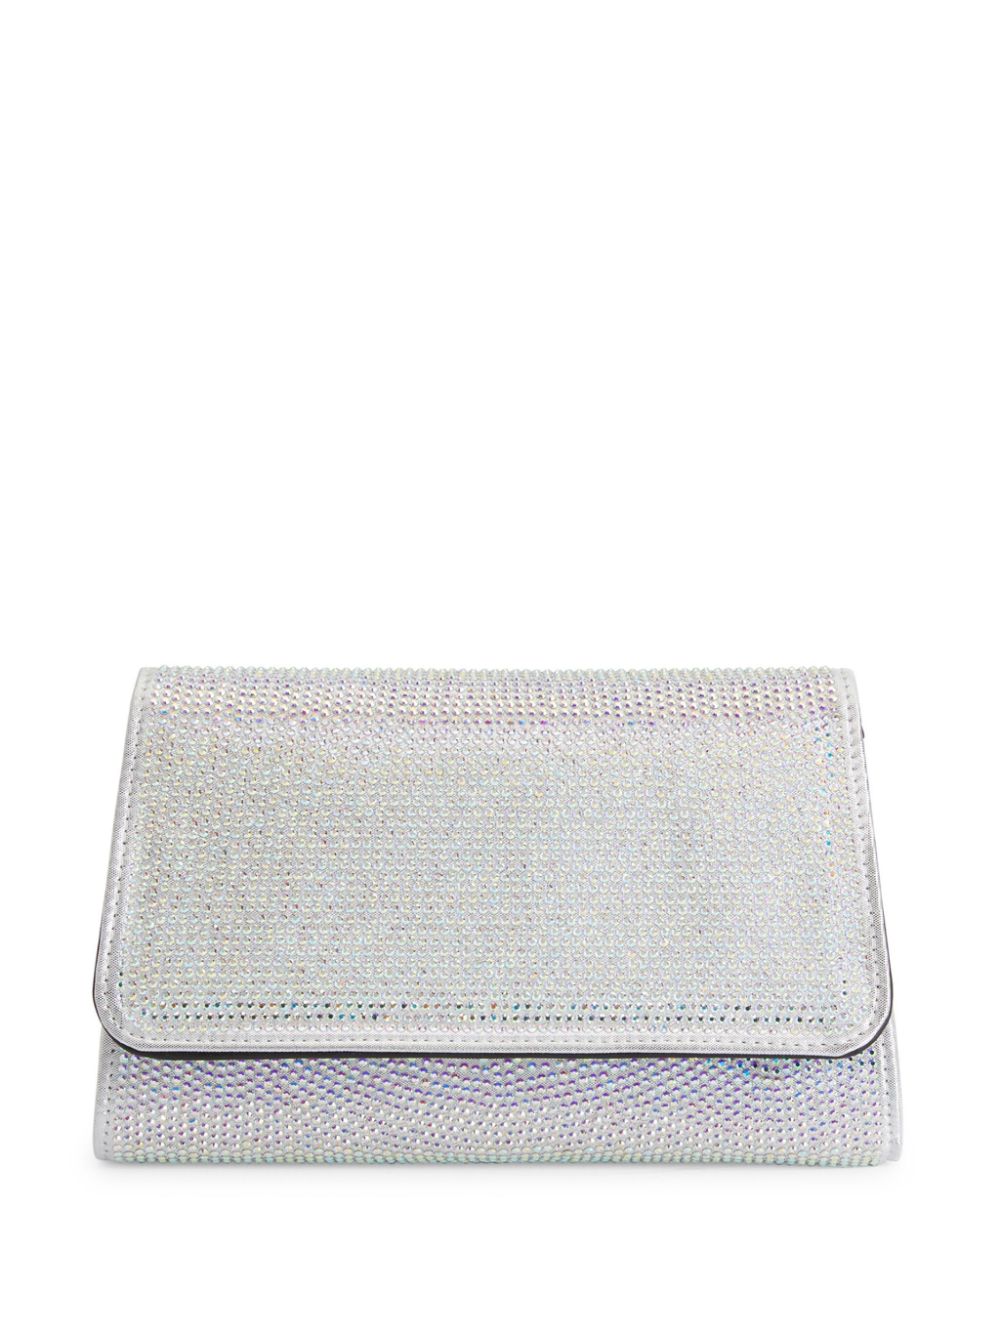 Idha crystal-embellished clutch bag